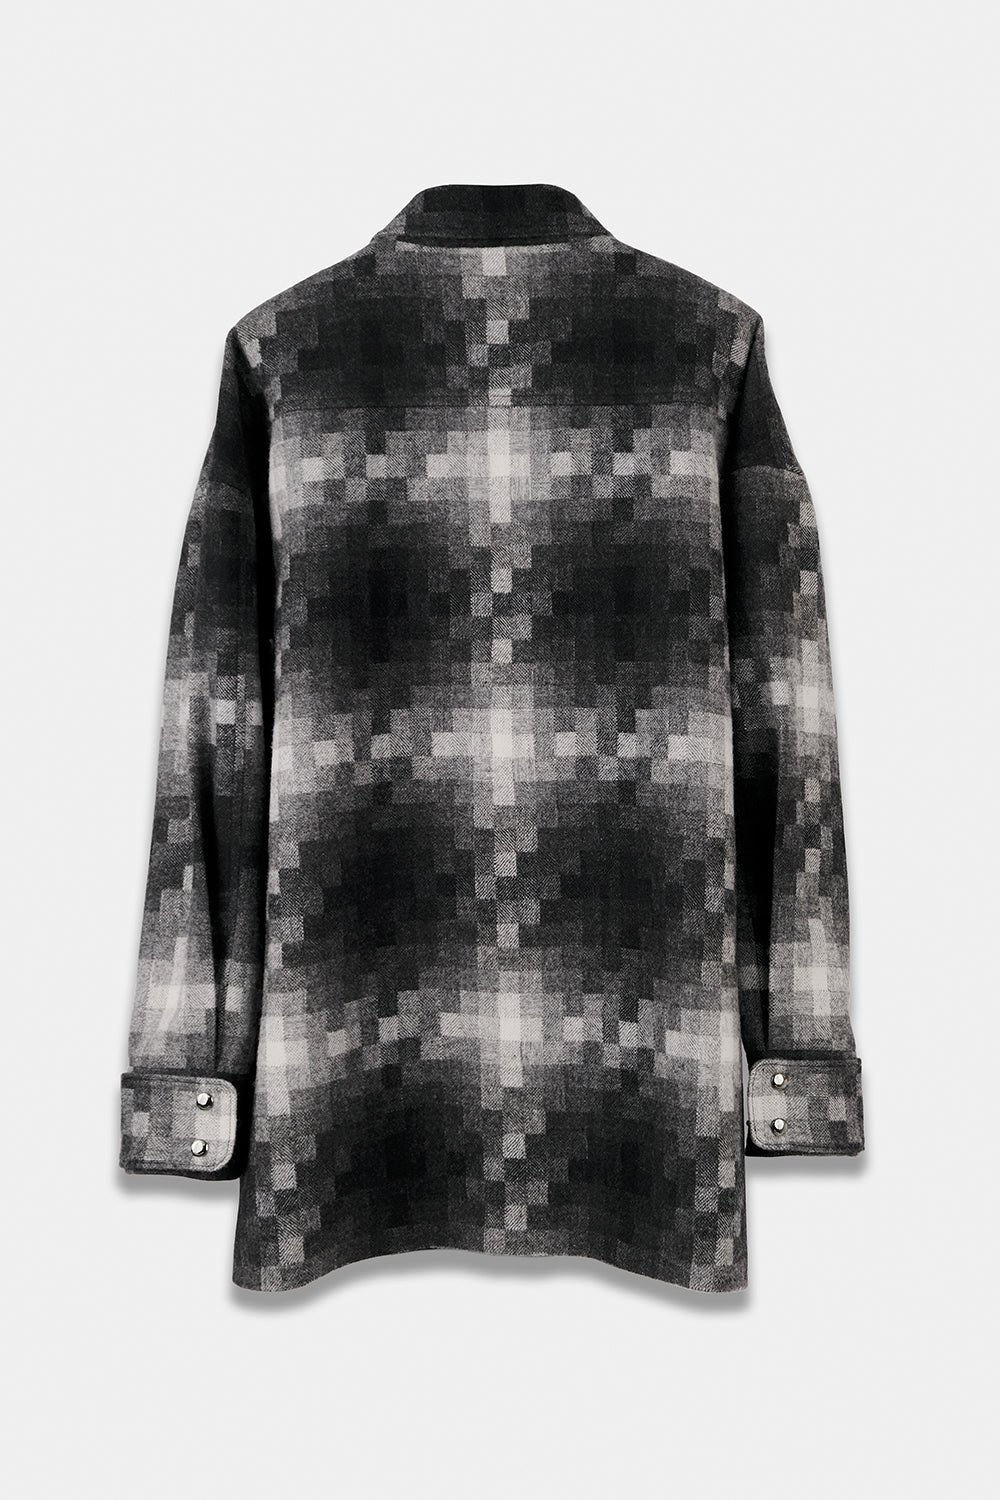 SEANNUNG - MEN - Plaid Pattern Wool Locomotivee Jacket 格紋毛料騎士夾克